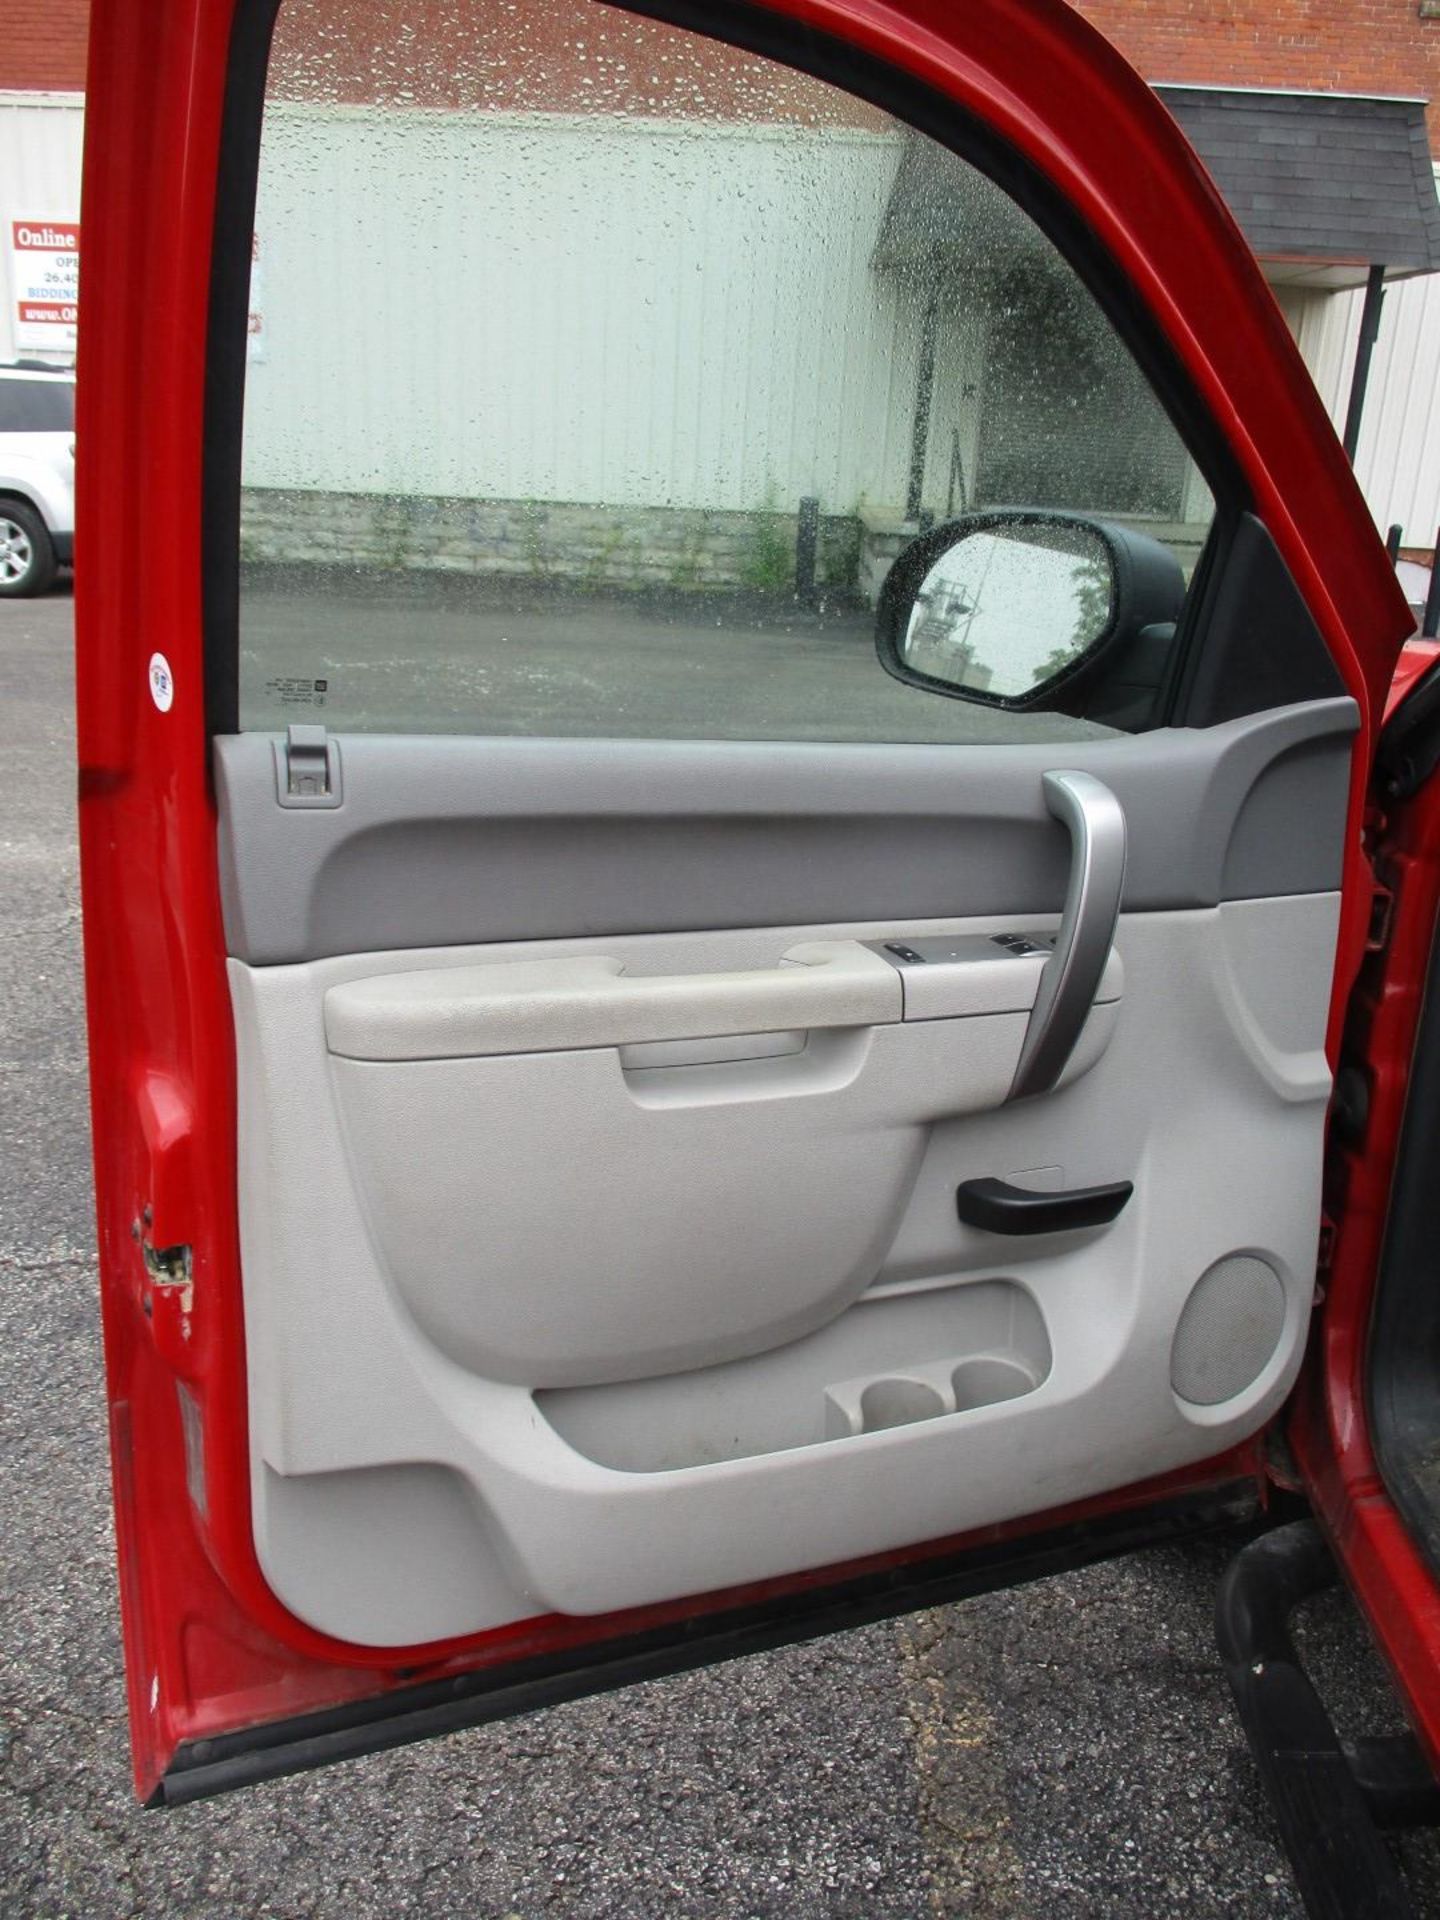 2012 GMC Sierra 1500 Pickup, VIN 1GTN1TEAXCZ138182, Regular Cab, Automatic, AC, 8' Bed, Tonneau - Image 15 of 24